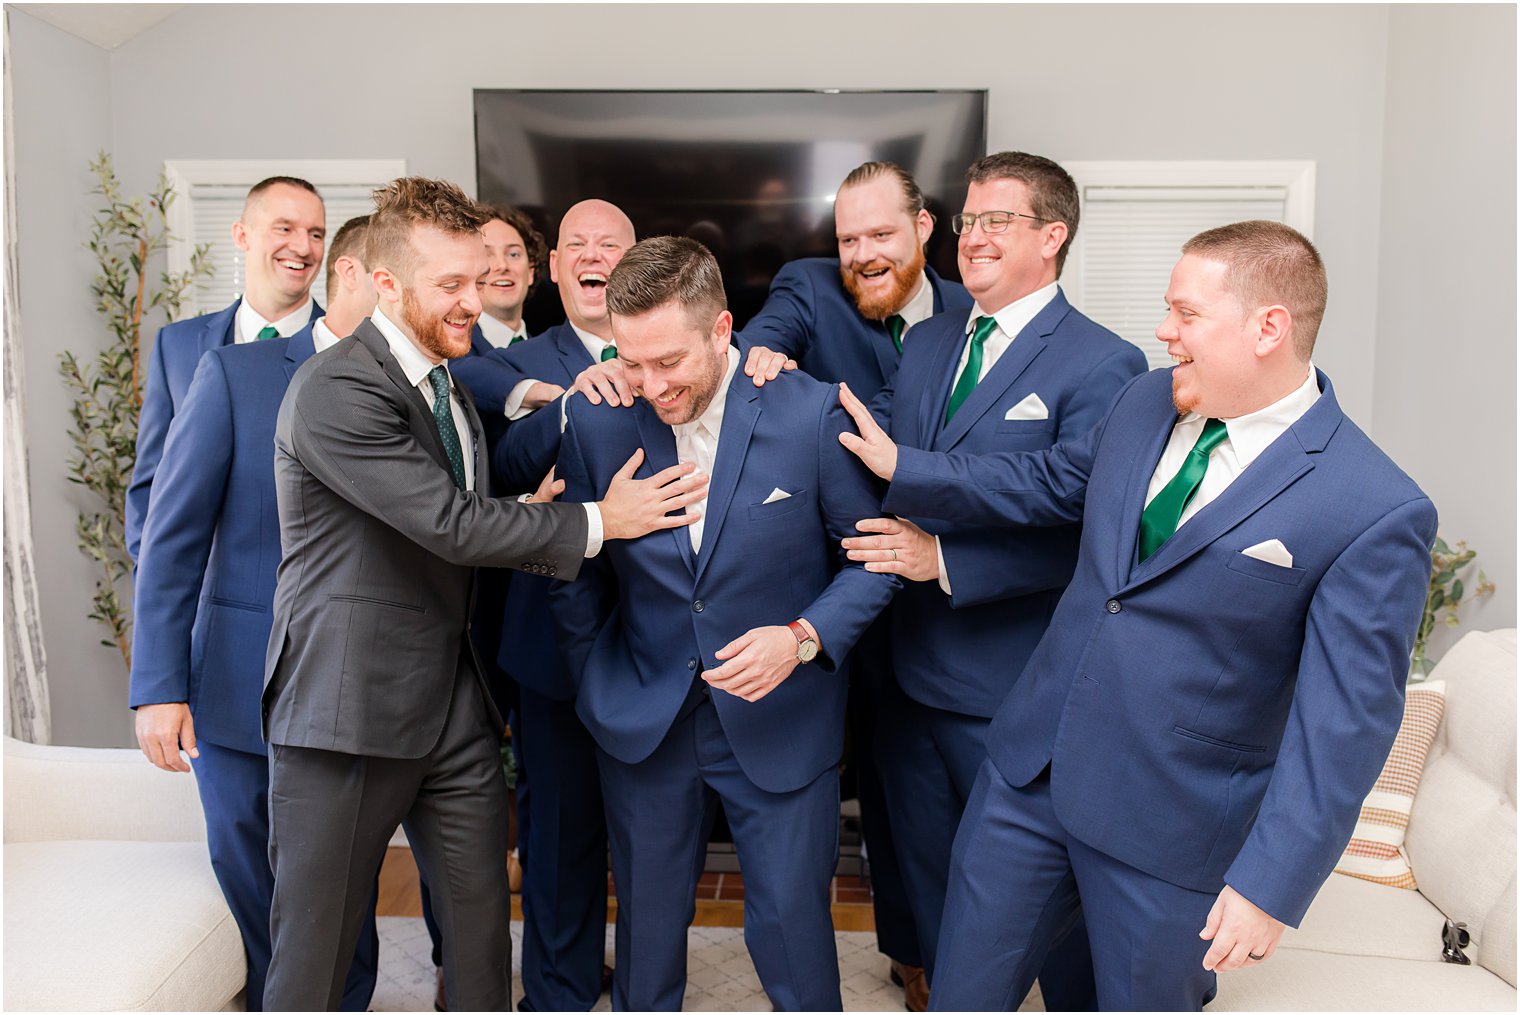 groomsmen in navy suits with emerald ties pat groom on the back 